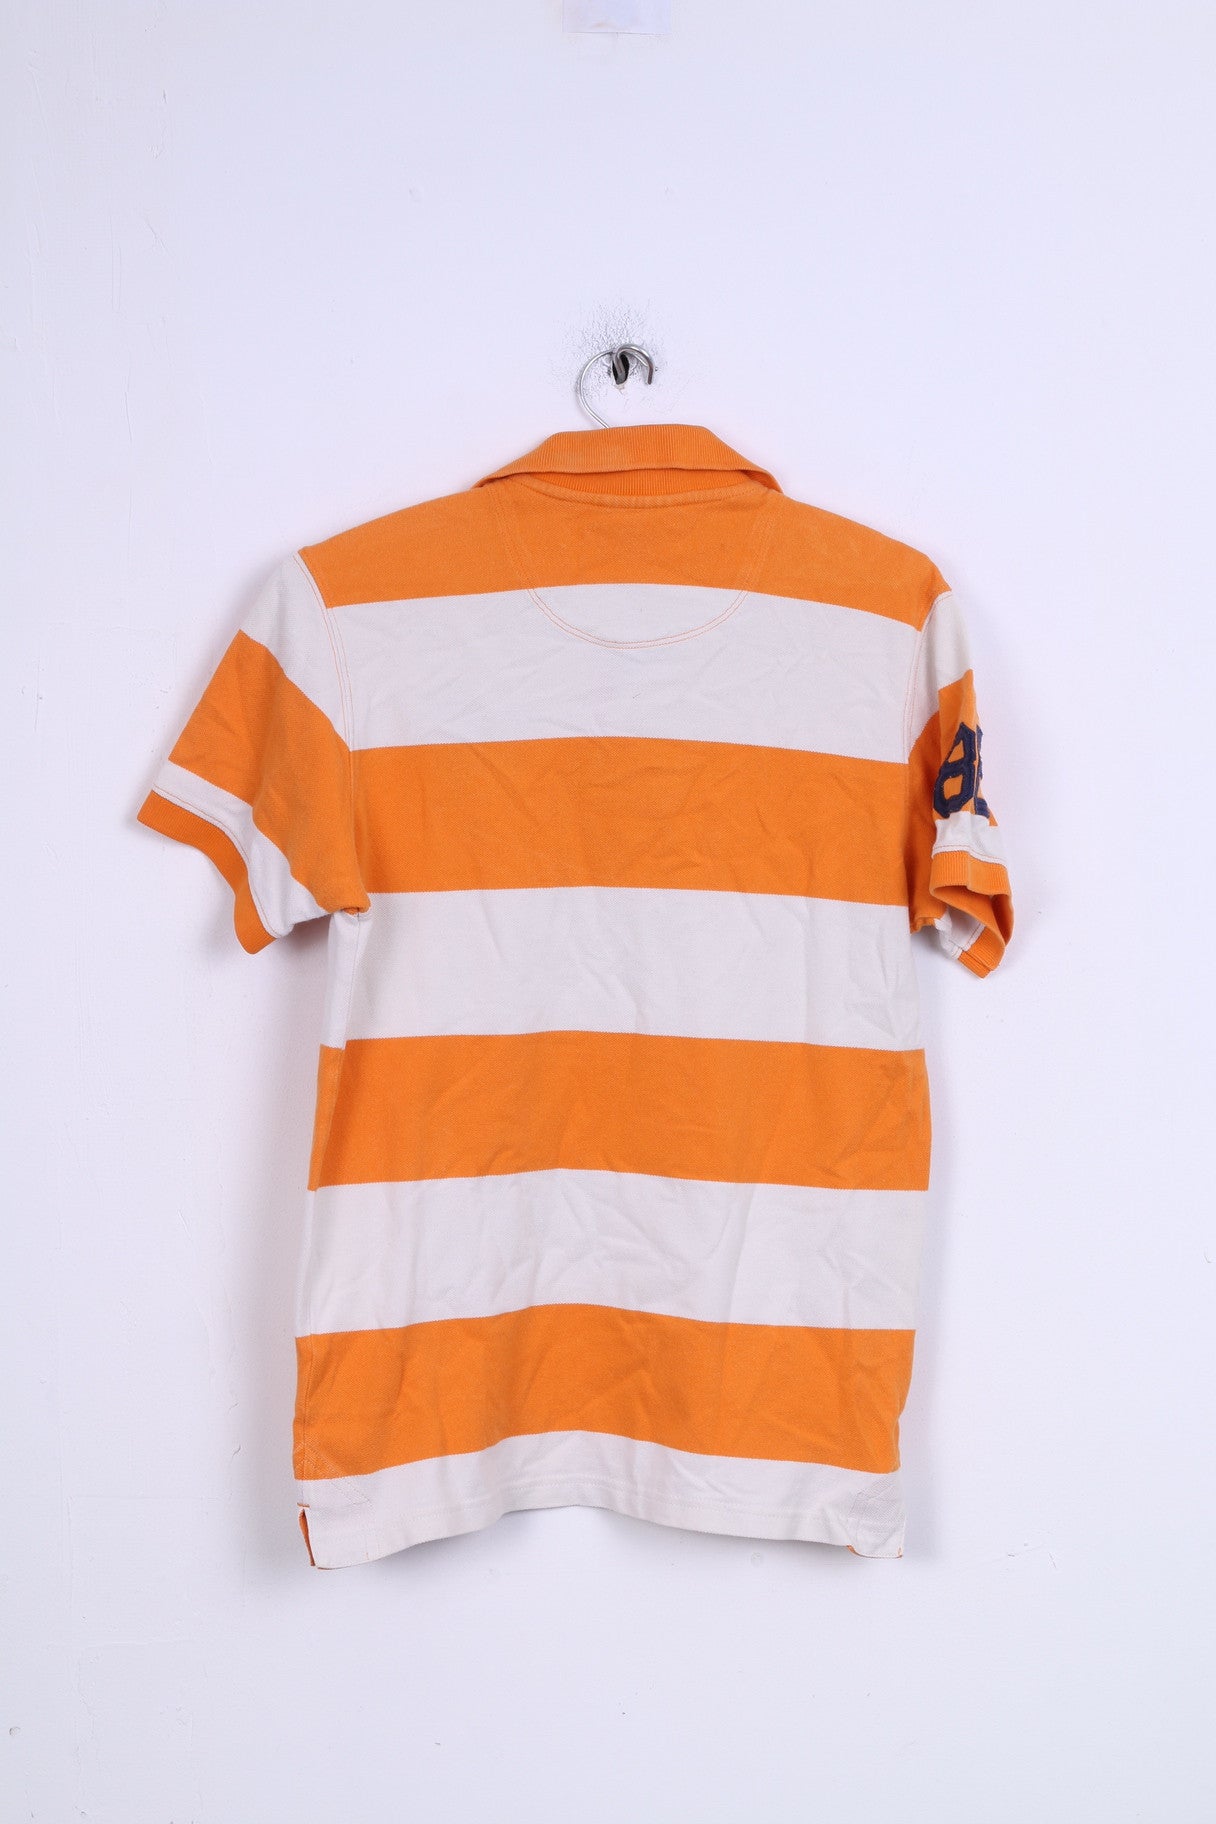 Peak Performance Mens S Polo Shirt Striped Orange Cotton Short Sleeve